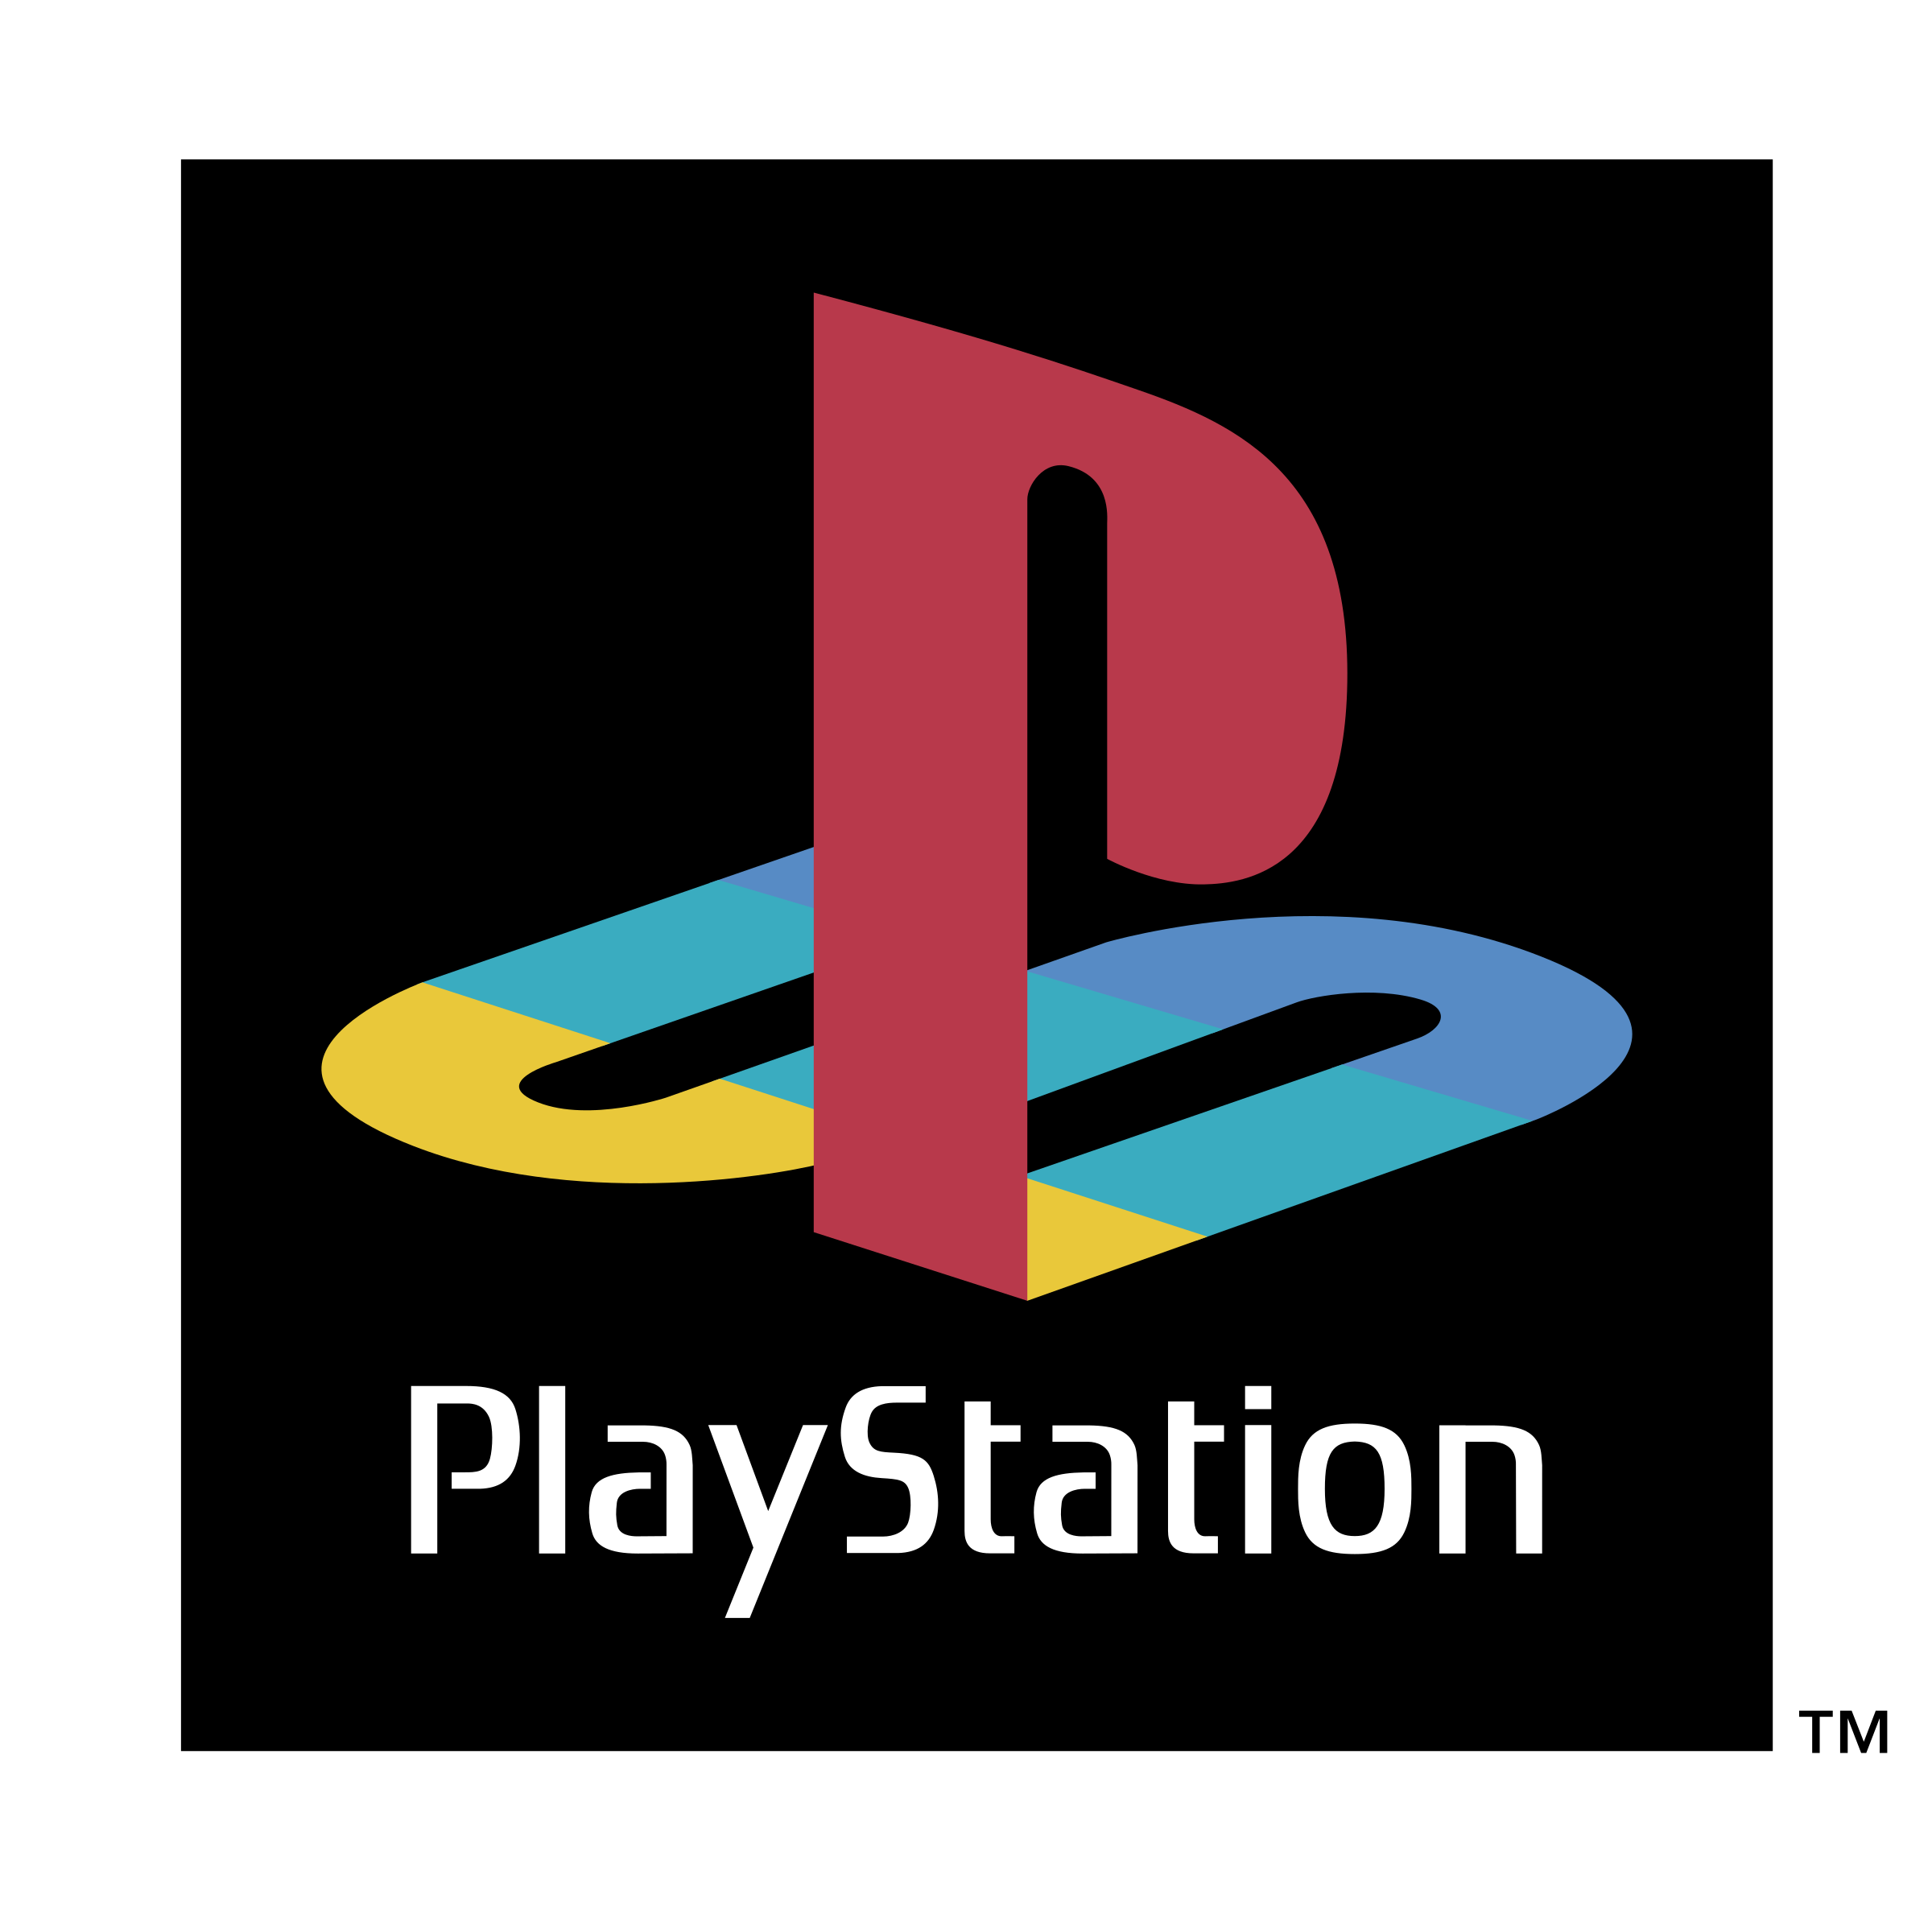 Playstation Logo PNG Free File Download